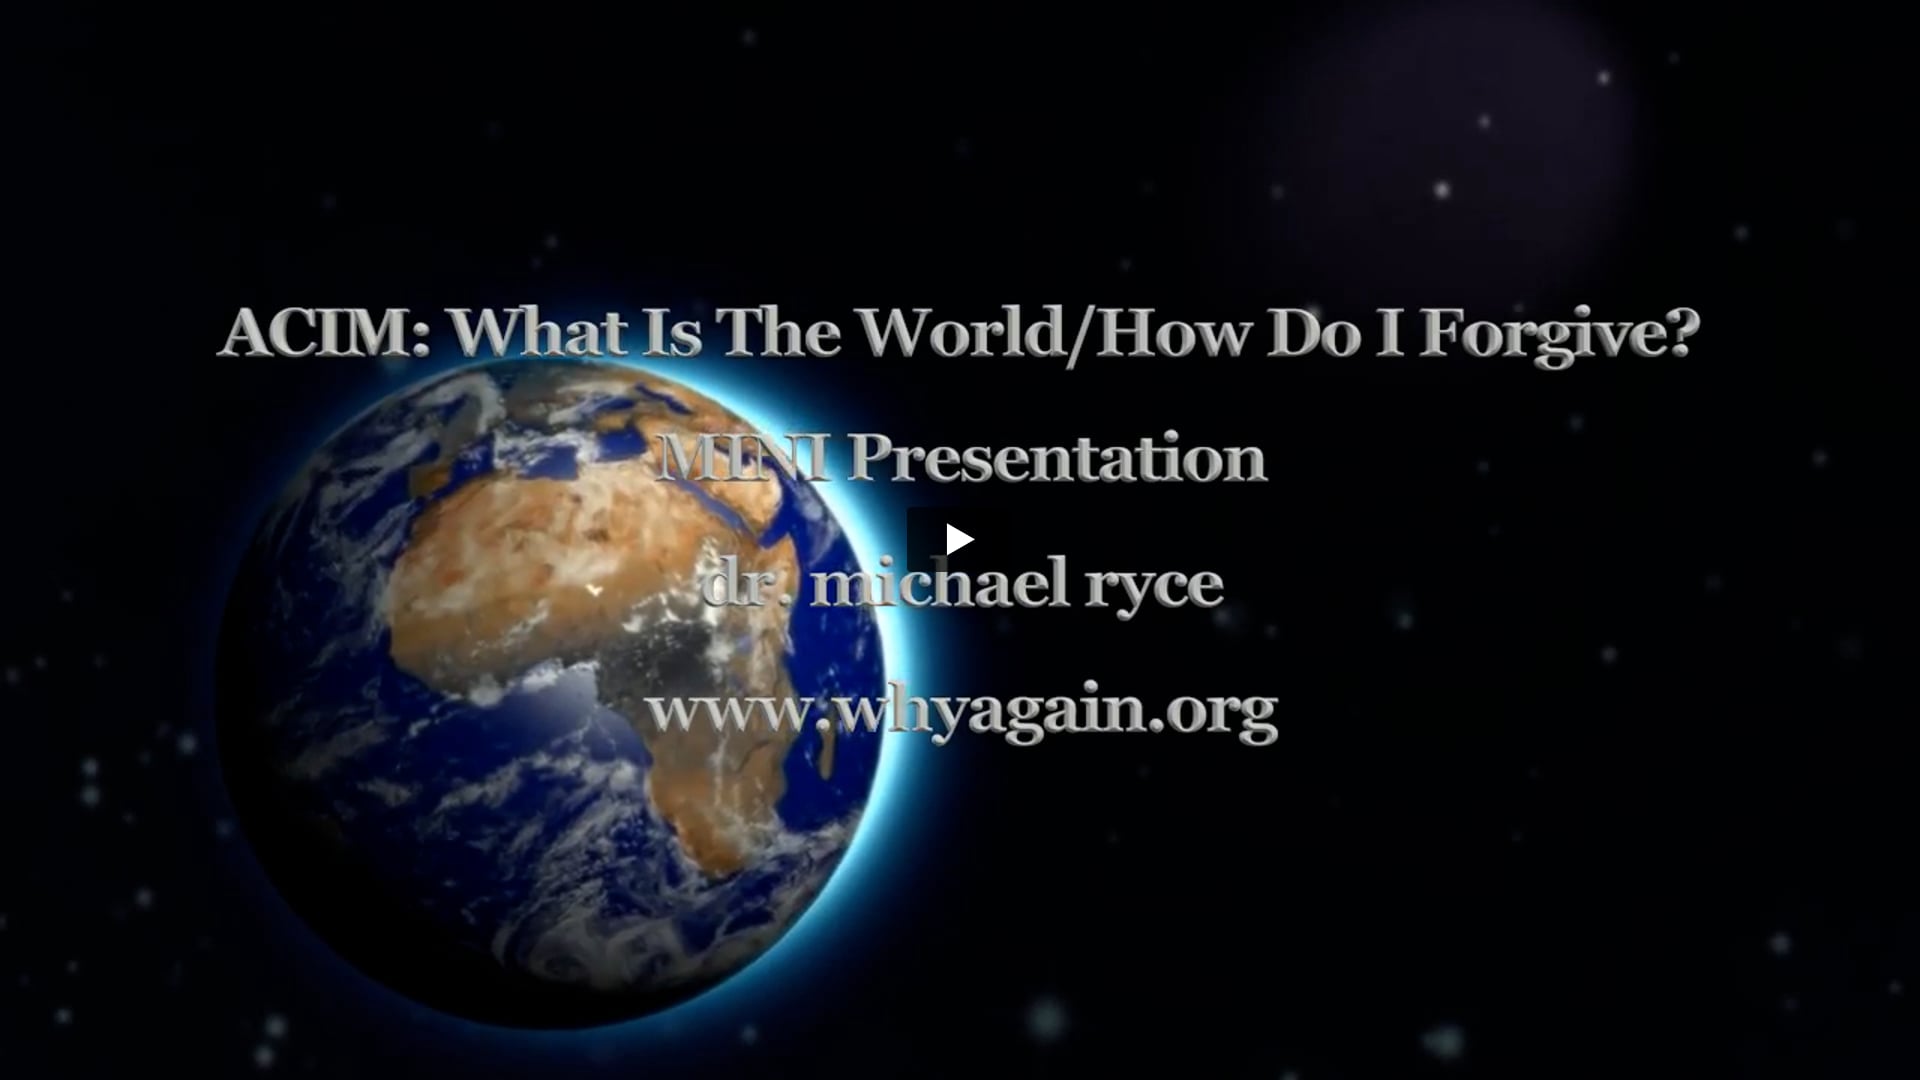 ACIM: What Is The World/How Do I Forgive?